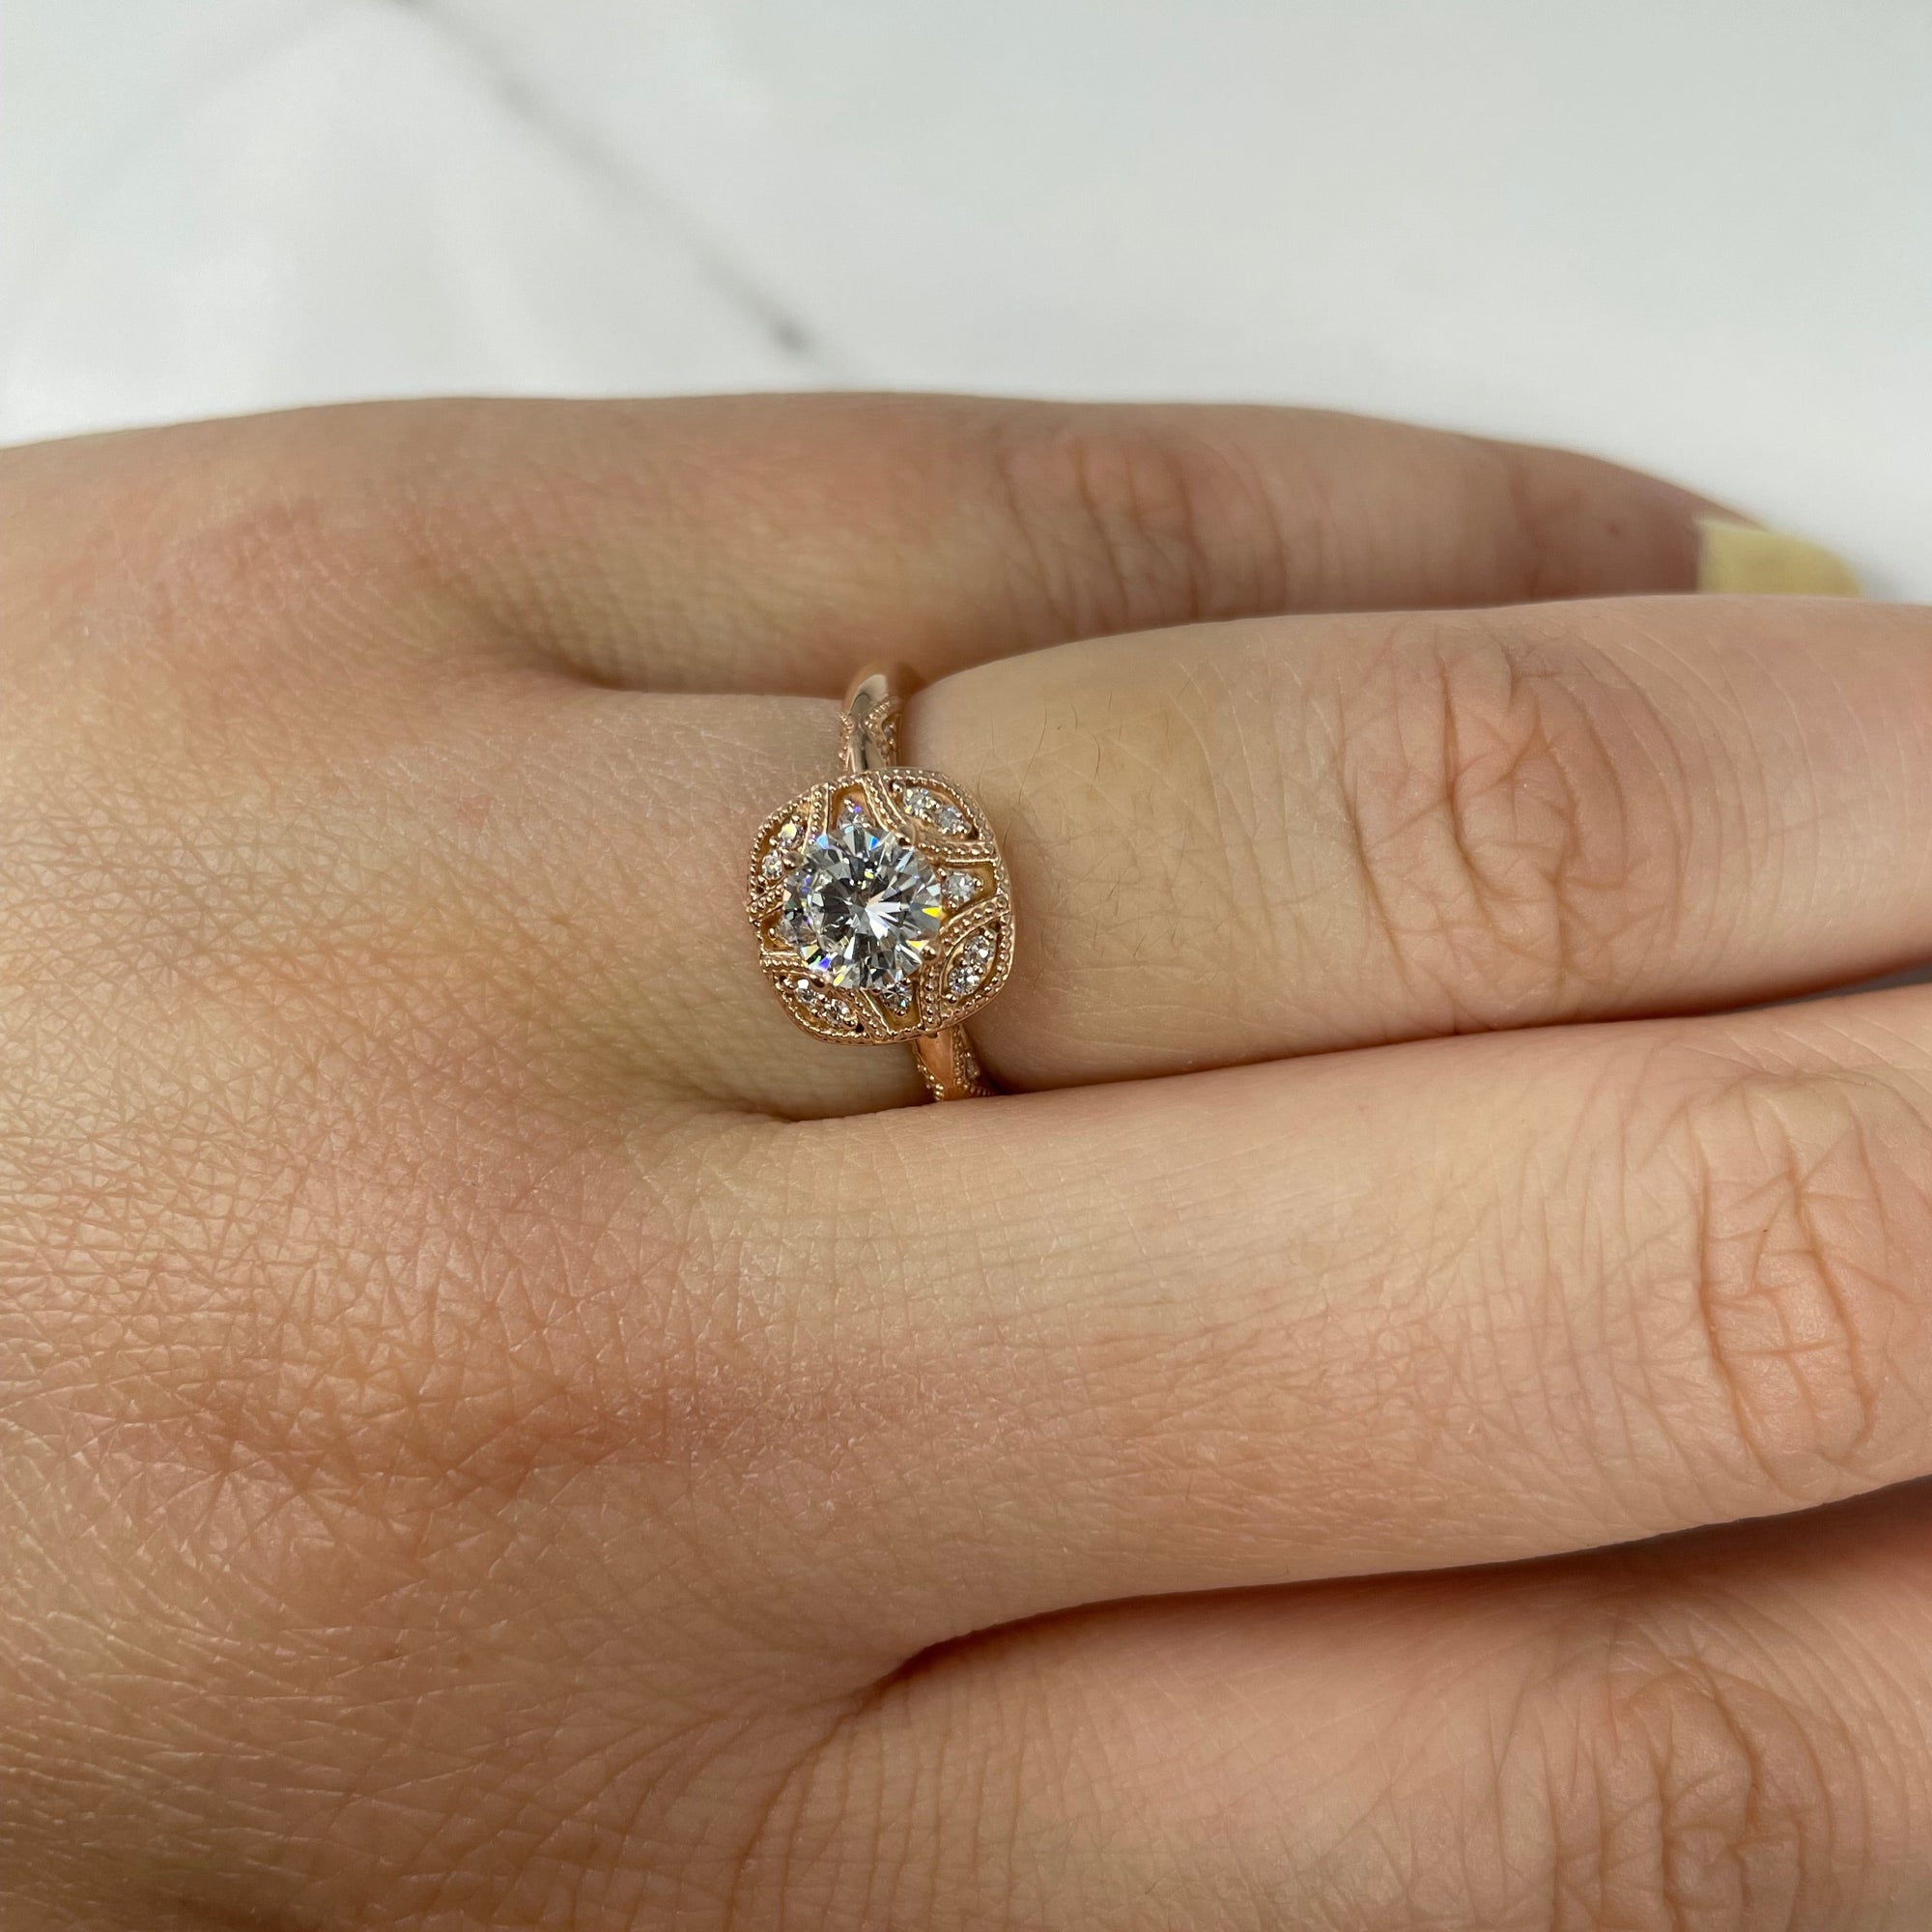 Bespoke' Art Deco Inspired Rose Gold Engagement Ring | 0.83ctw | SZ 7.25 |